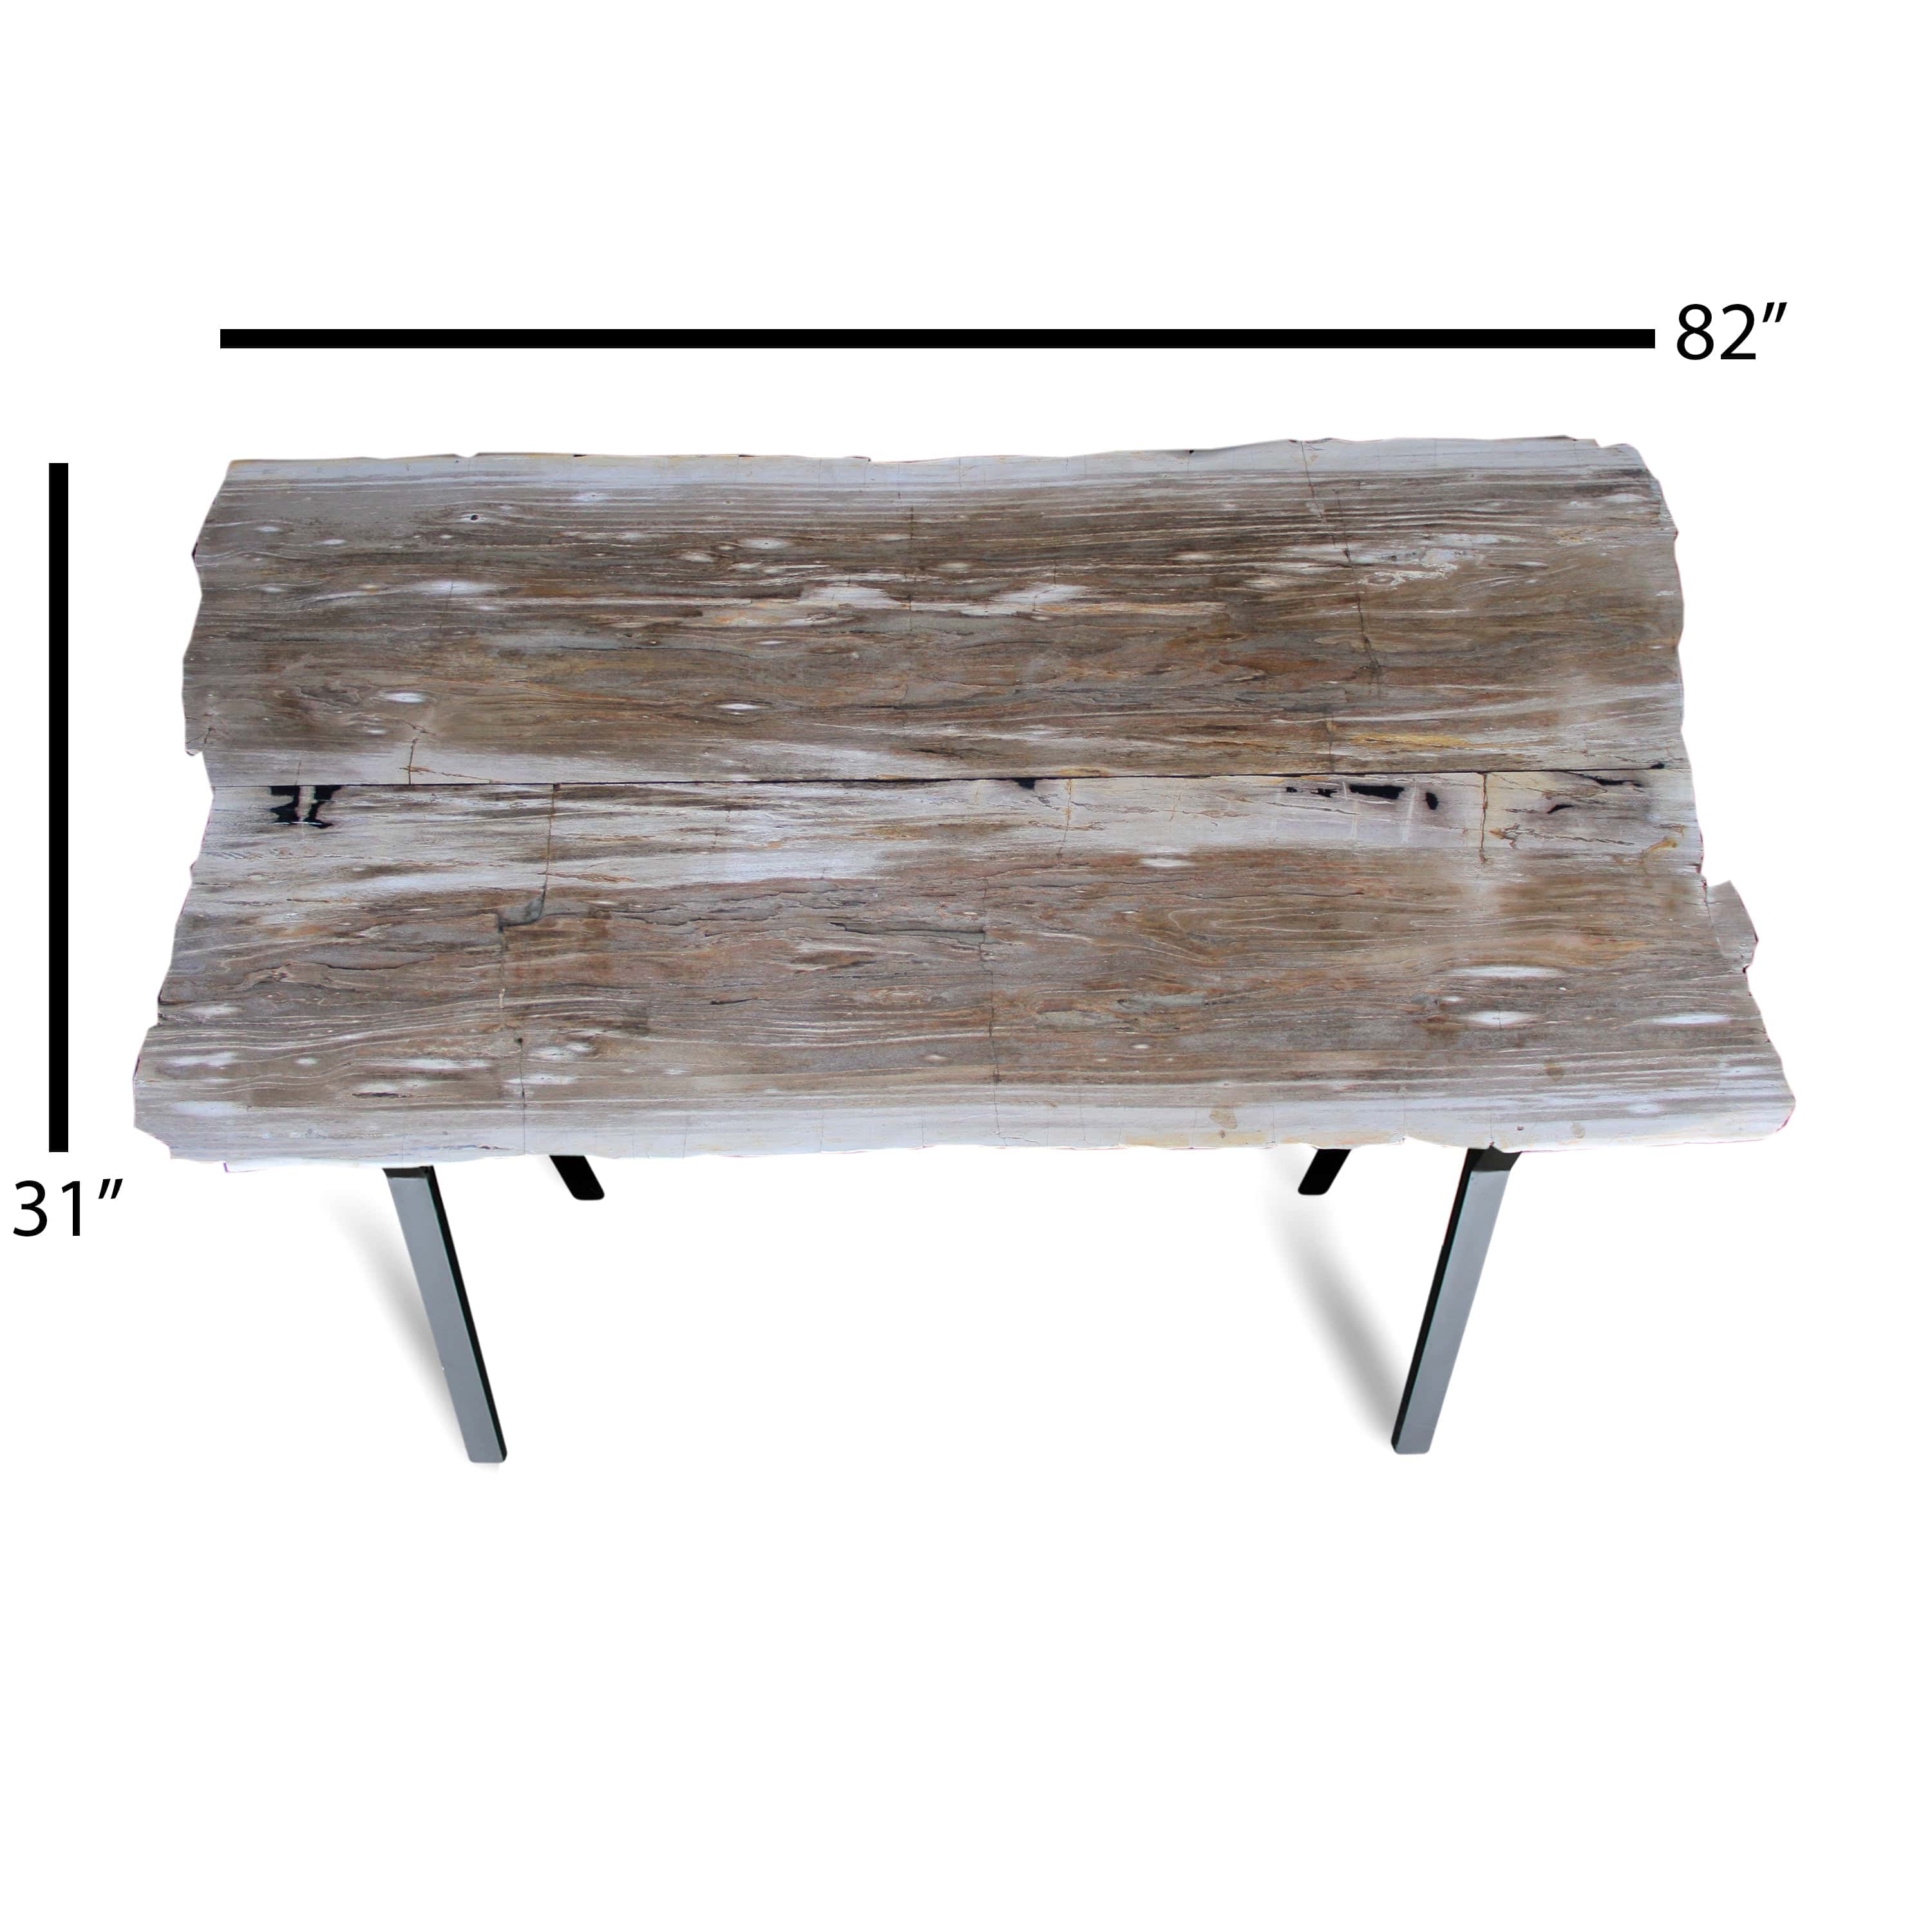 Kalifano Petrified Wood Polished Petrified Wood Table from Indonesia - 82" / 494 lbs PWR17920.001